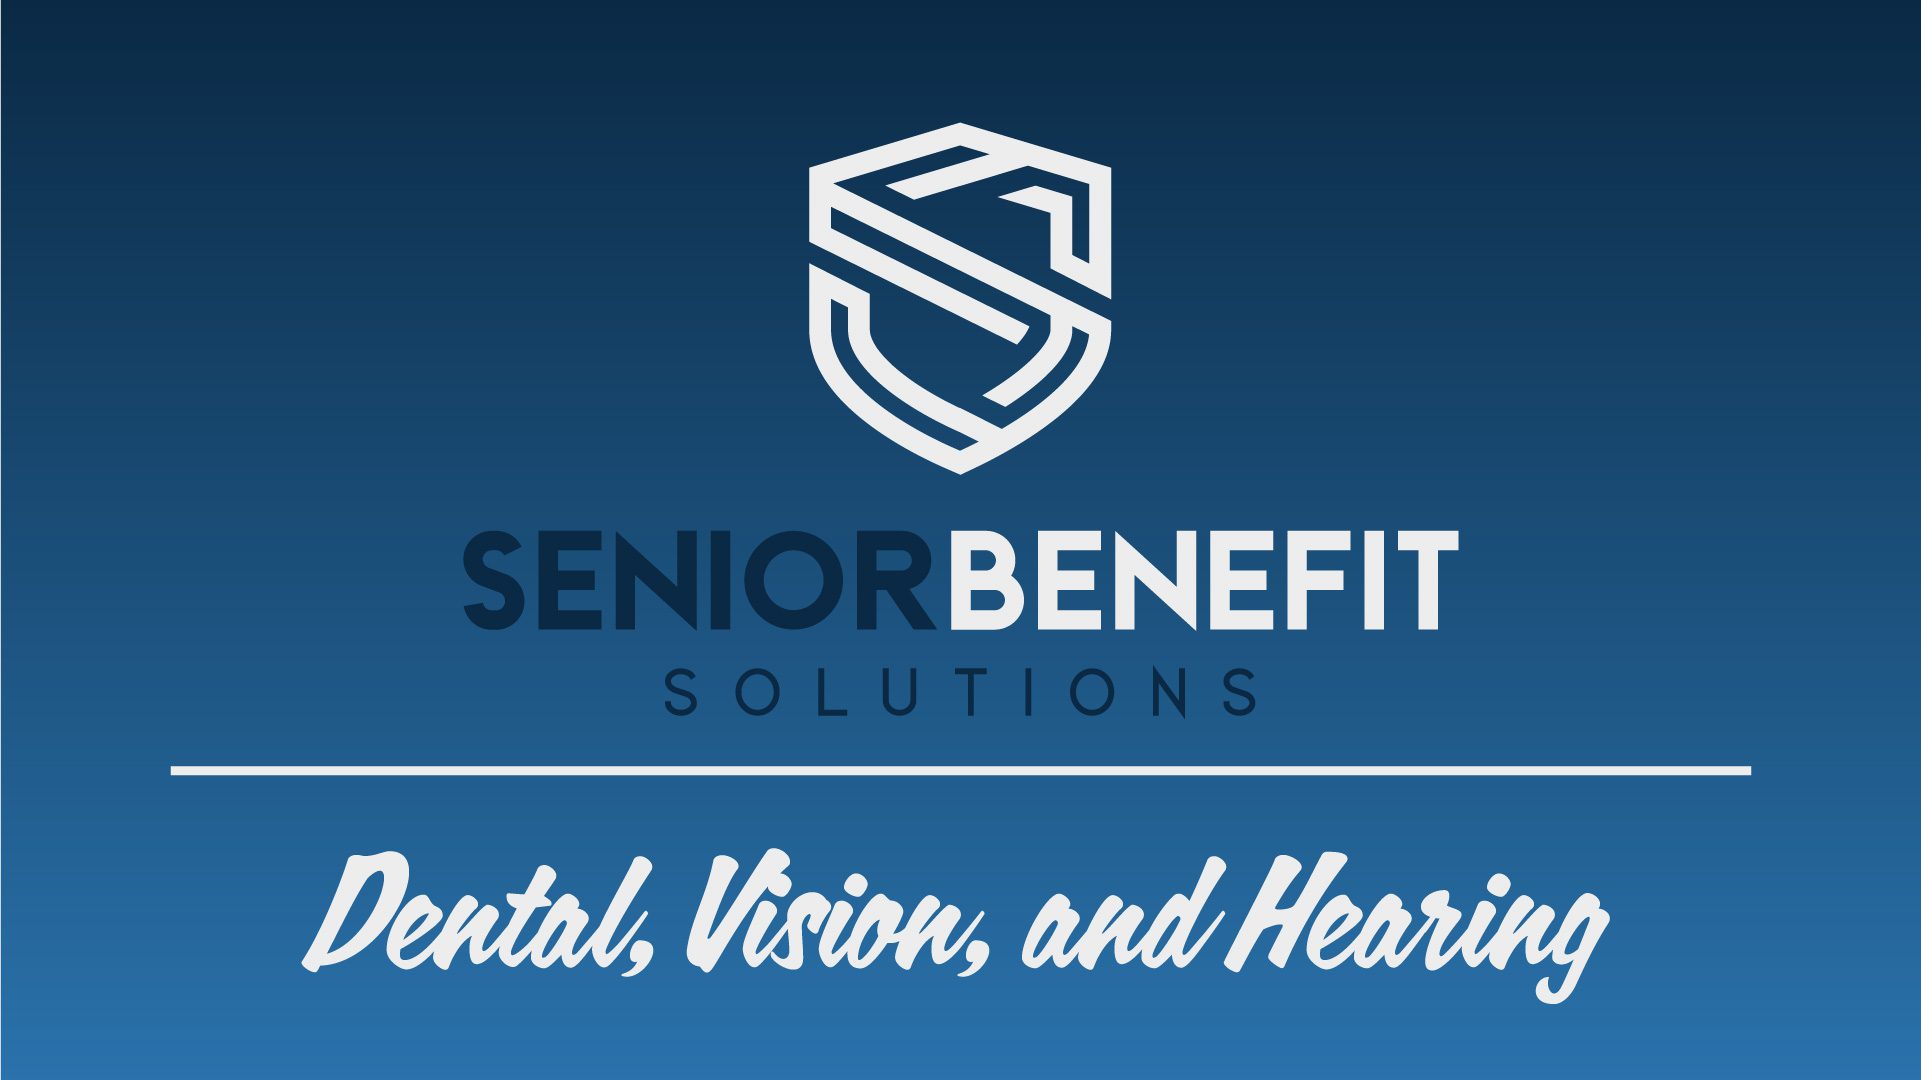 Dental, Vision, and Hearing; Senior Benefit Solutions